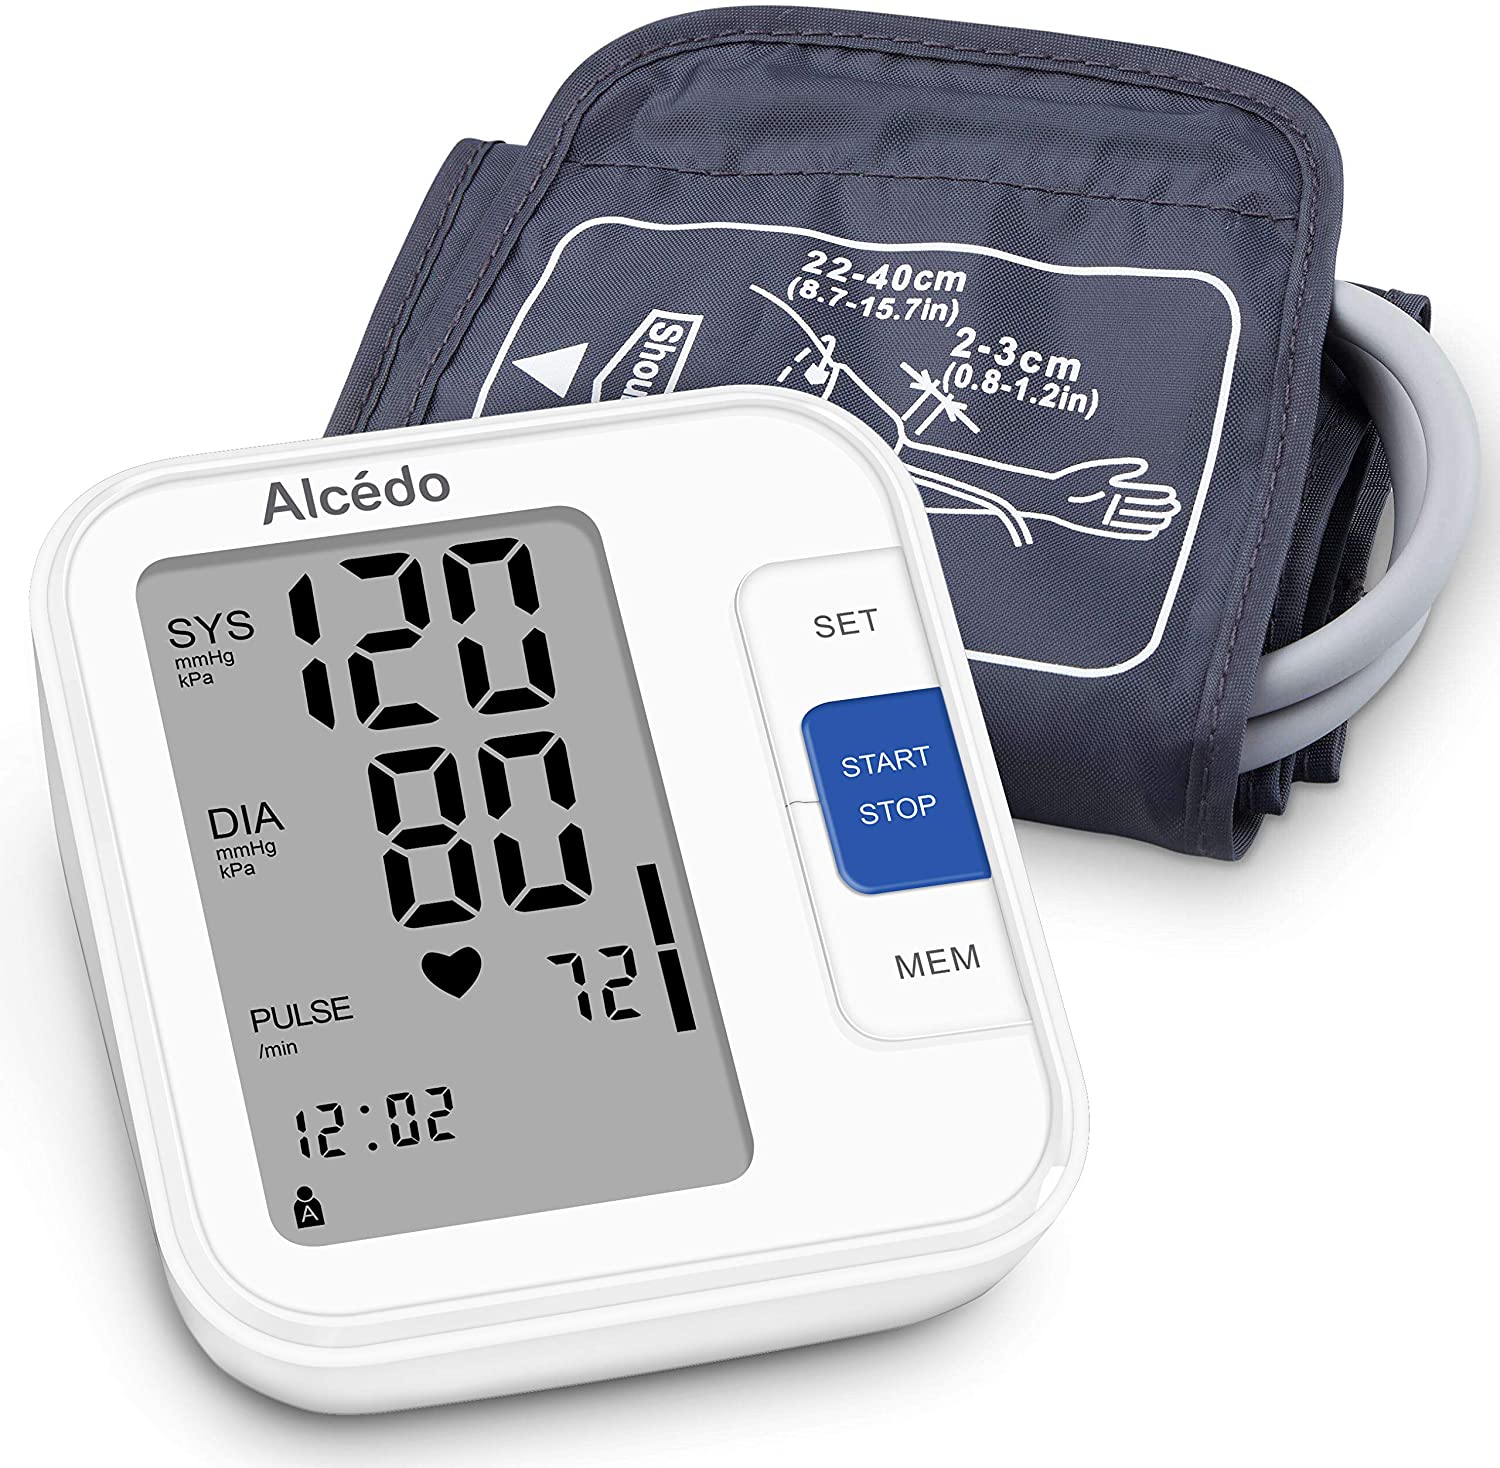 Alcedo Blood Pressure Monitor Review